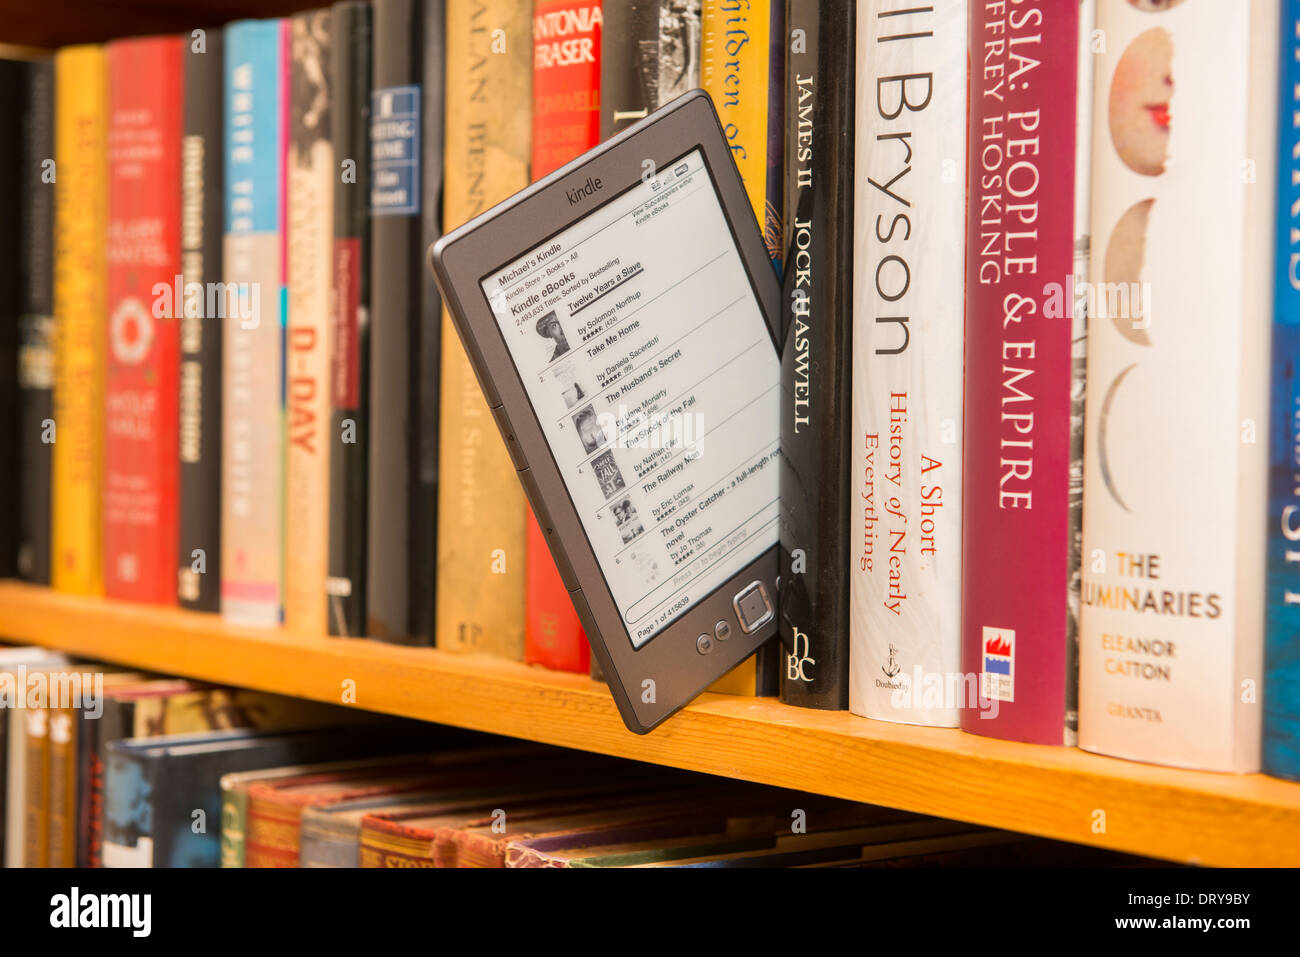 An Amazon Kindle In A Bookshelf Stock Photo 66368287 Alamy